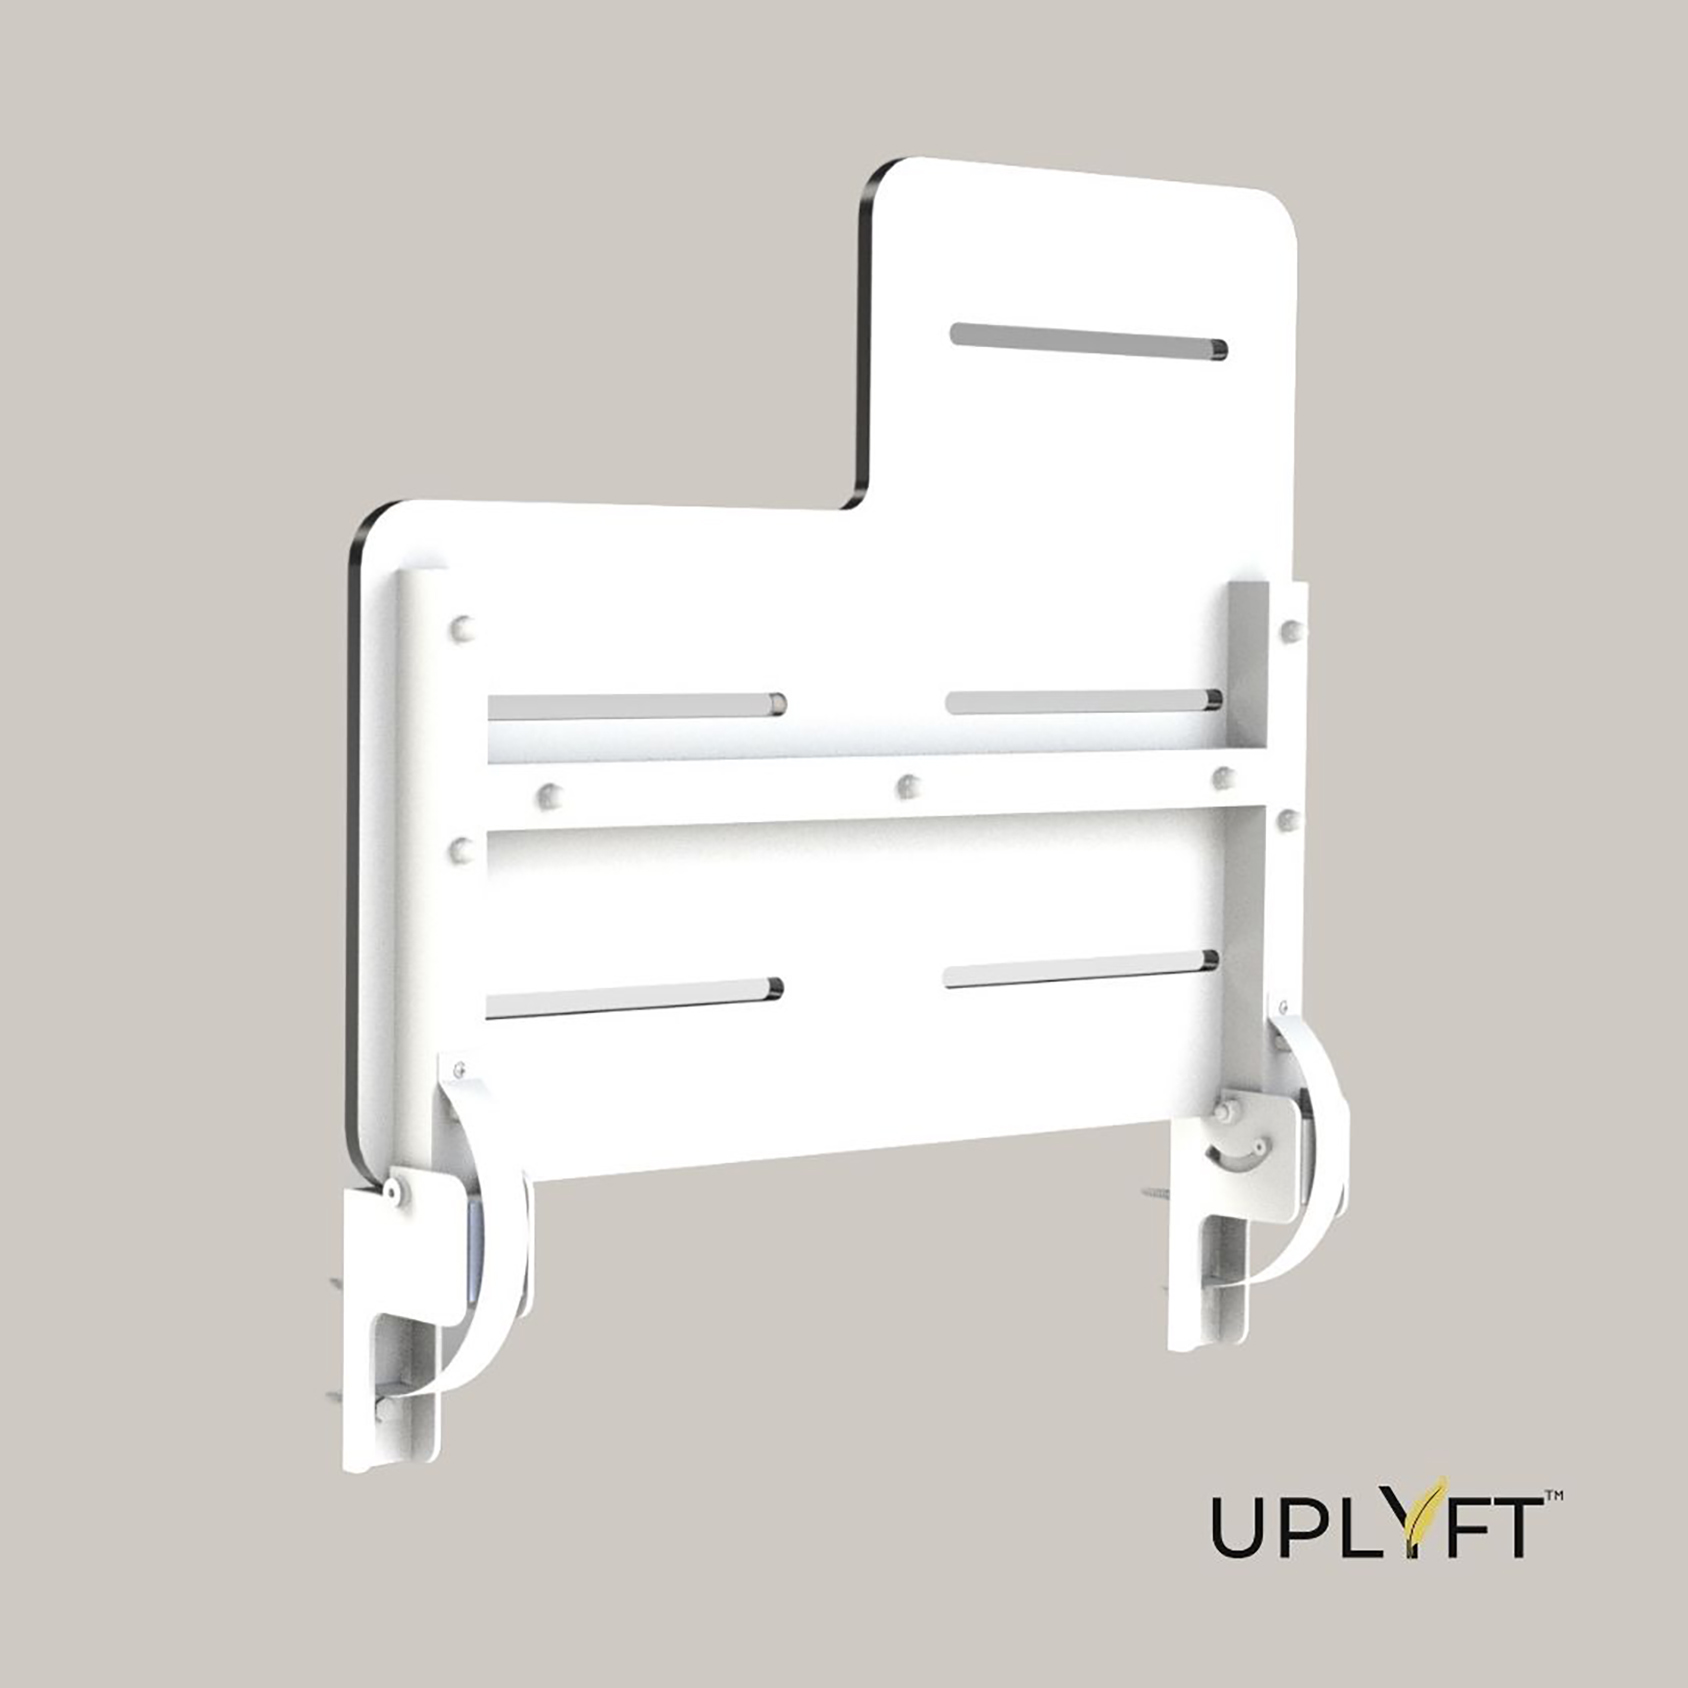 Uplyft L-Shaped | Bathware Wall CSI Mount Shower Seat